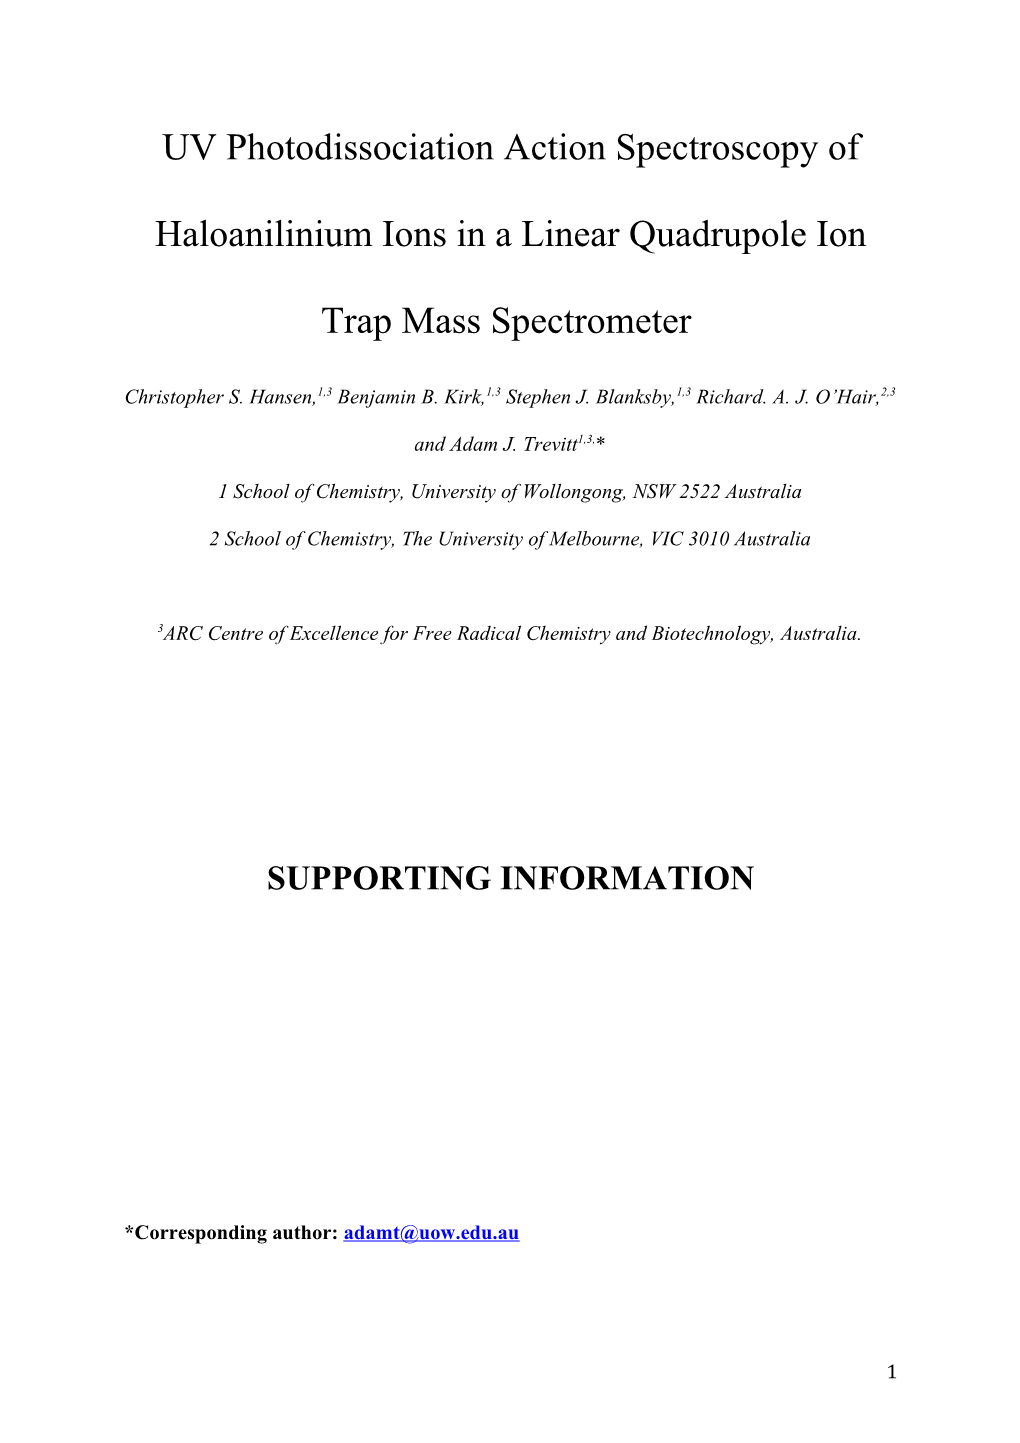 UV Photodissociation Action Spectroscopy of Haloanilinium Ions in a Linear Quadrupole Ion